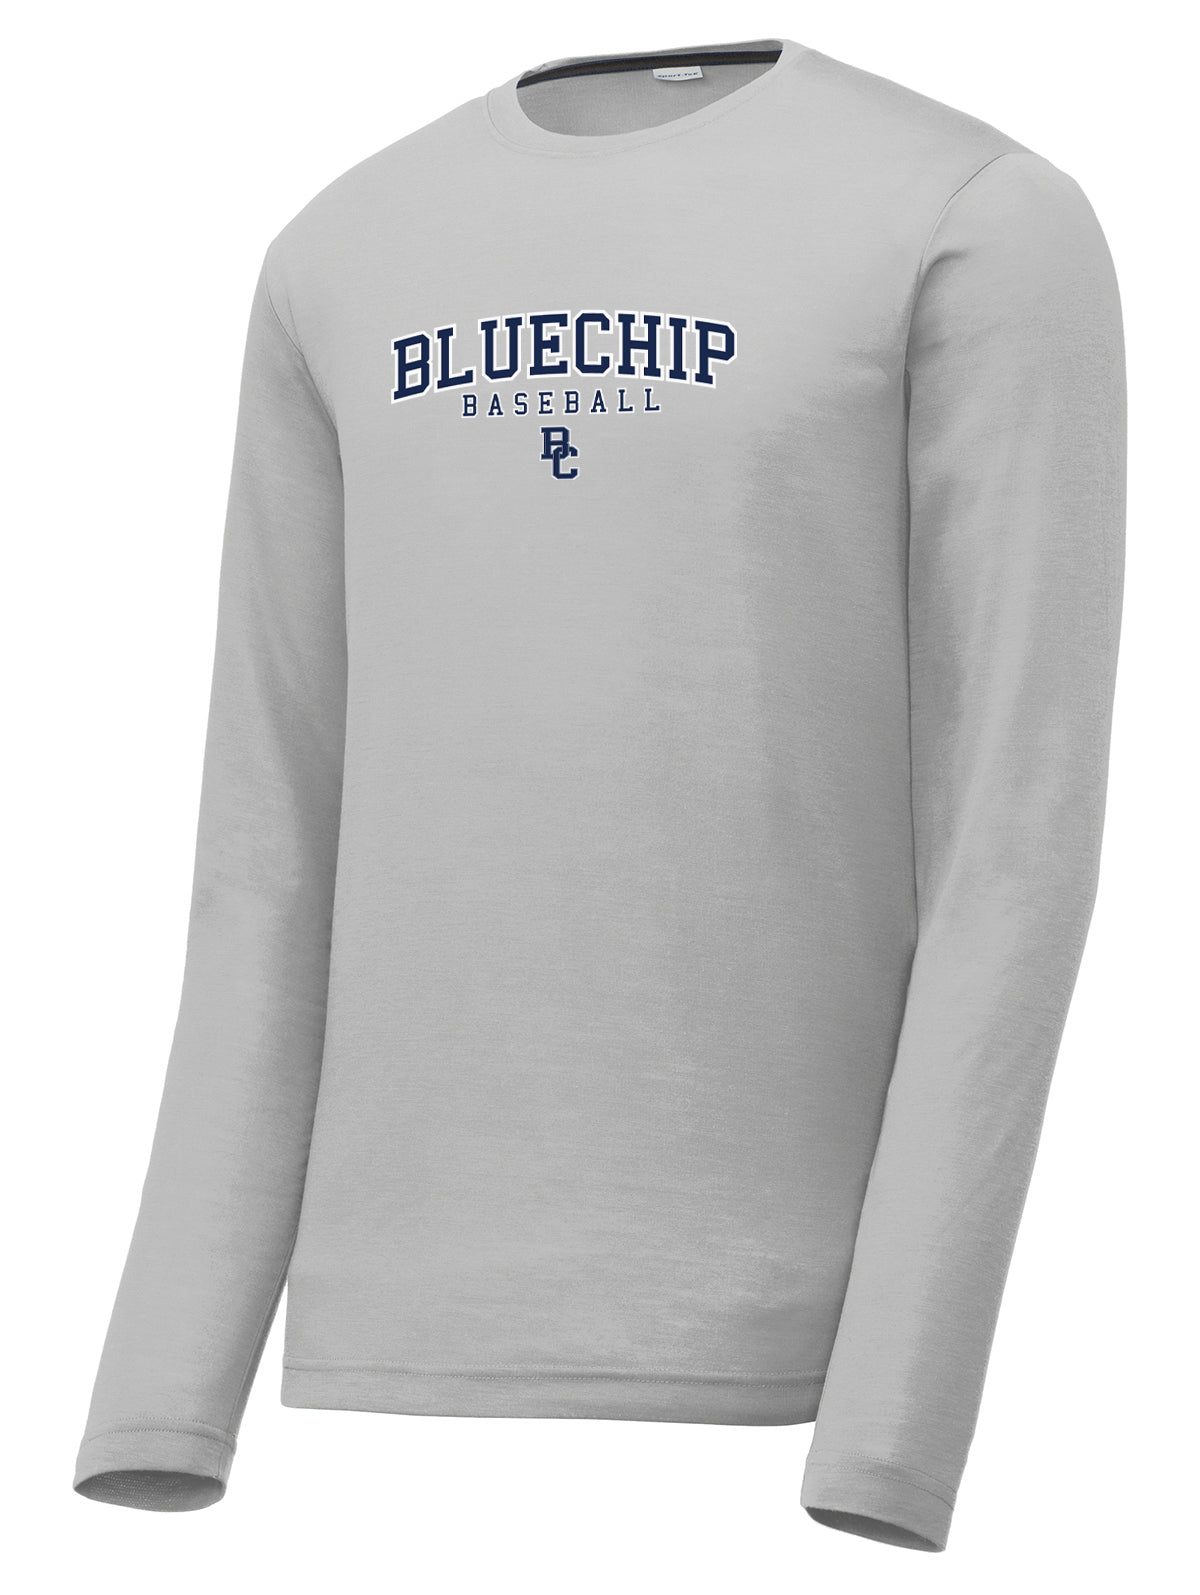 BlueChip Baseball Long Sleeve CottonTouch Performance Shirt